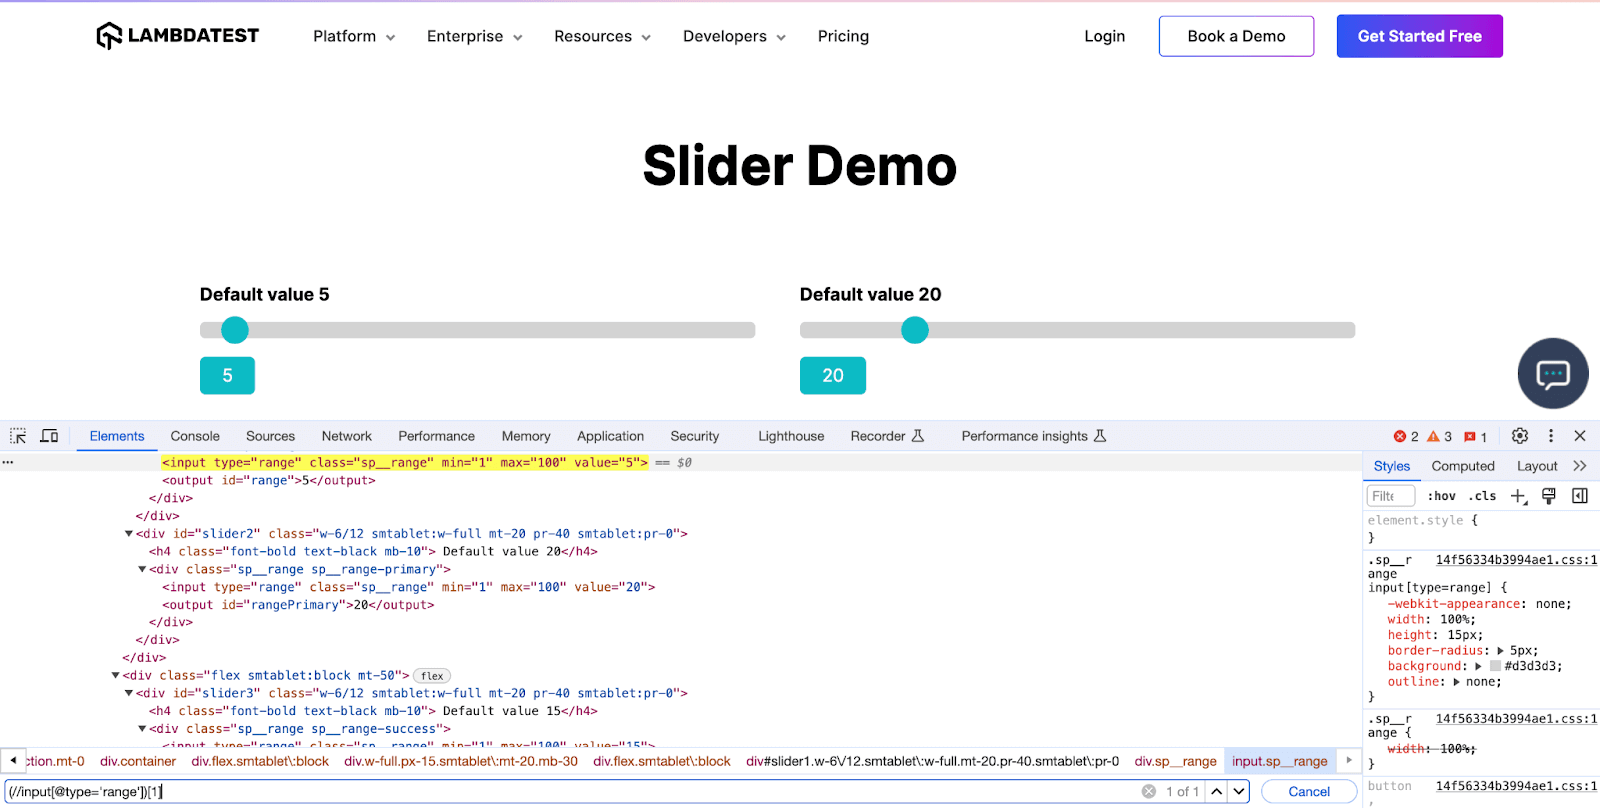 Slider Demo page